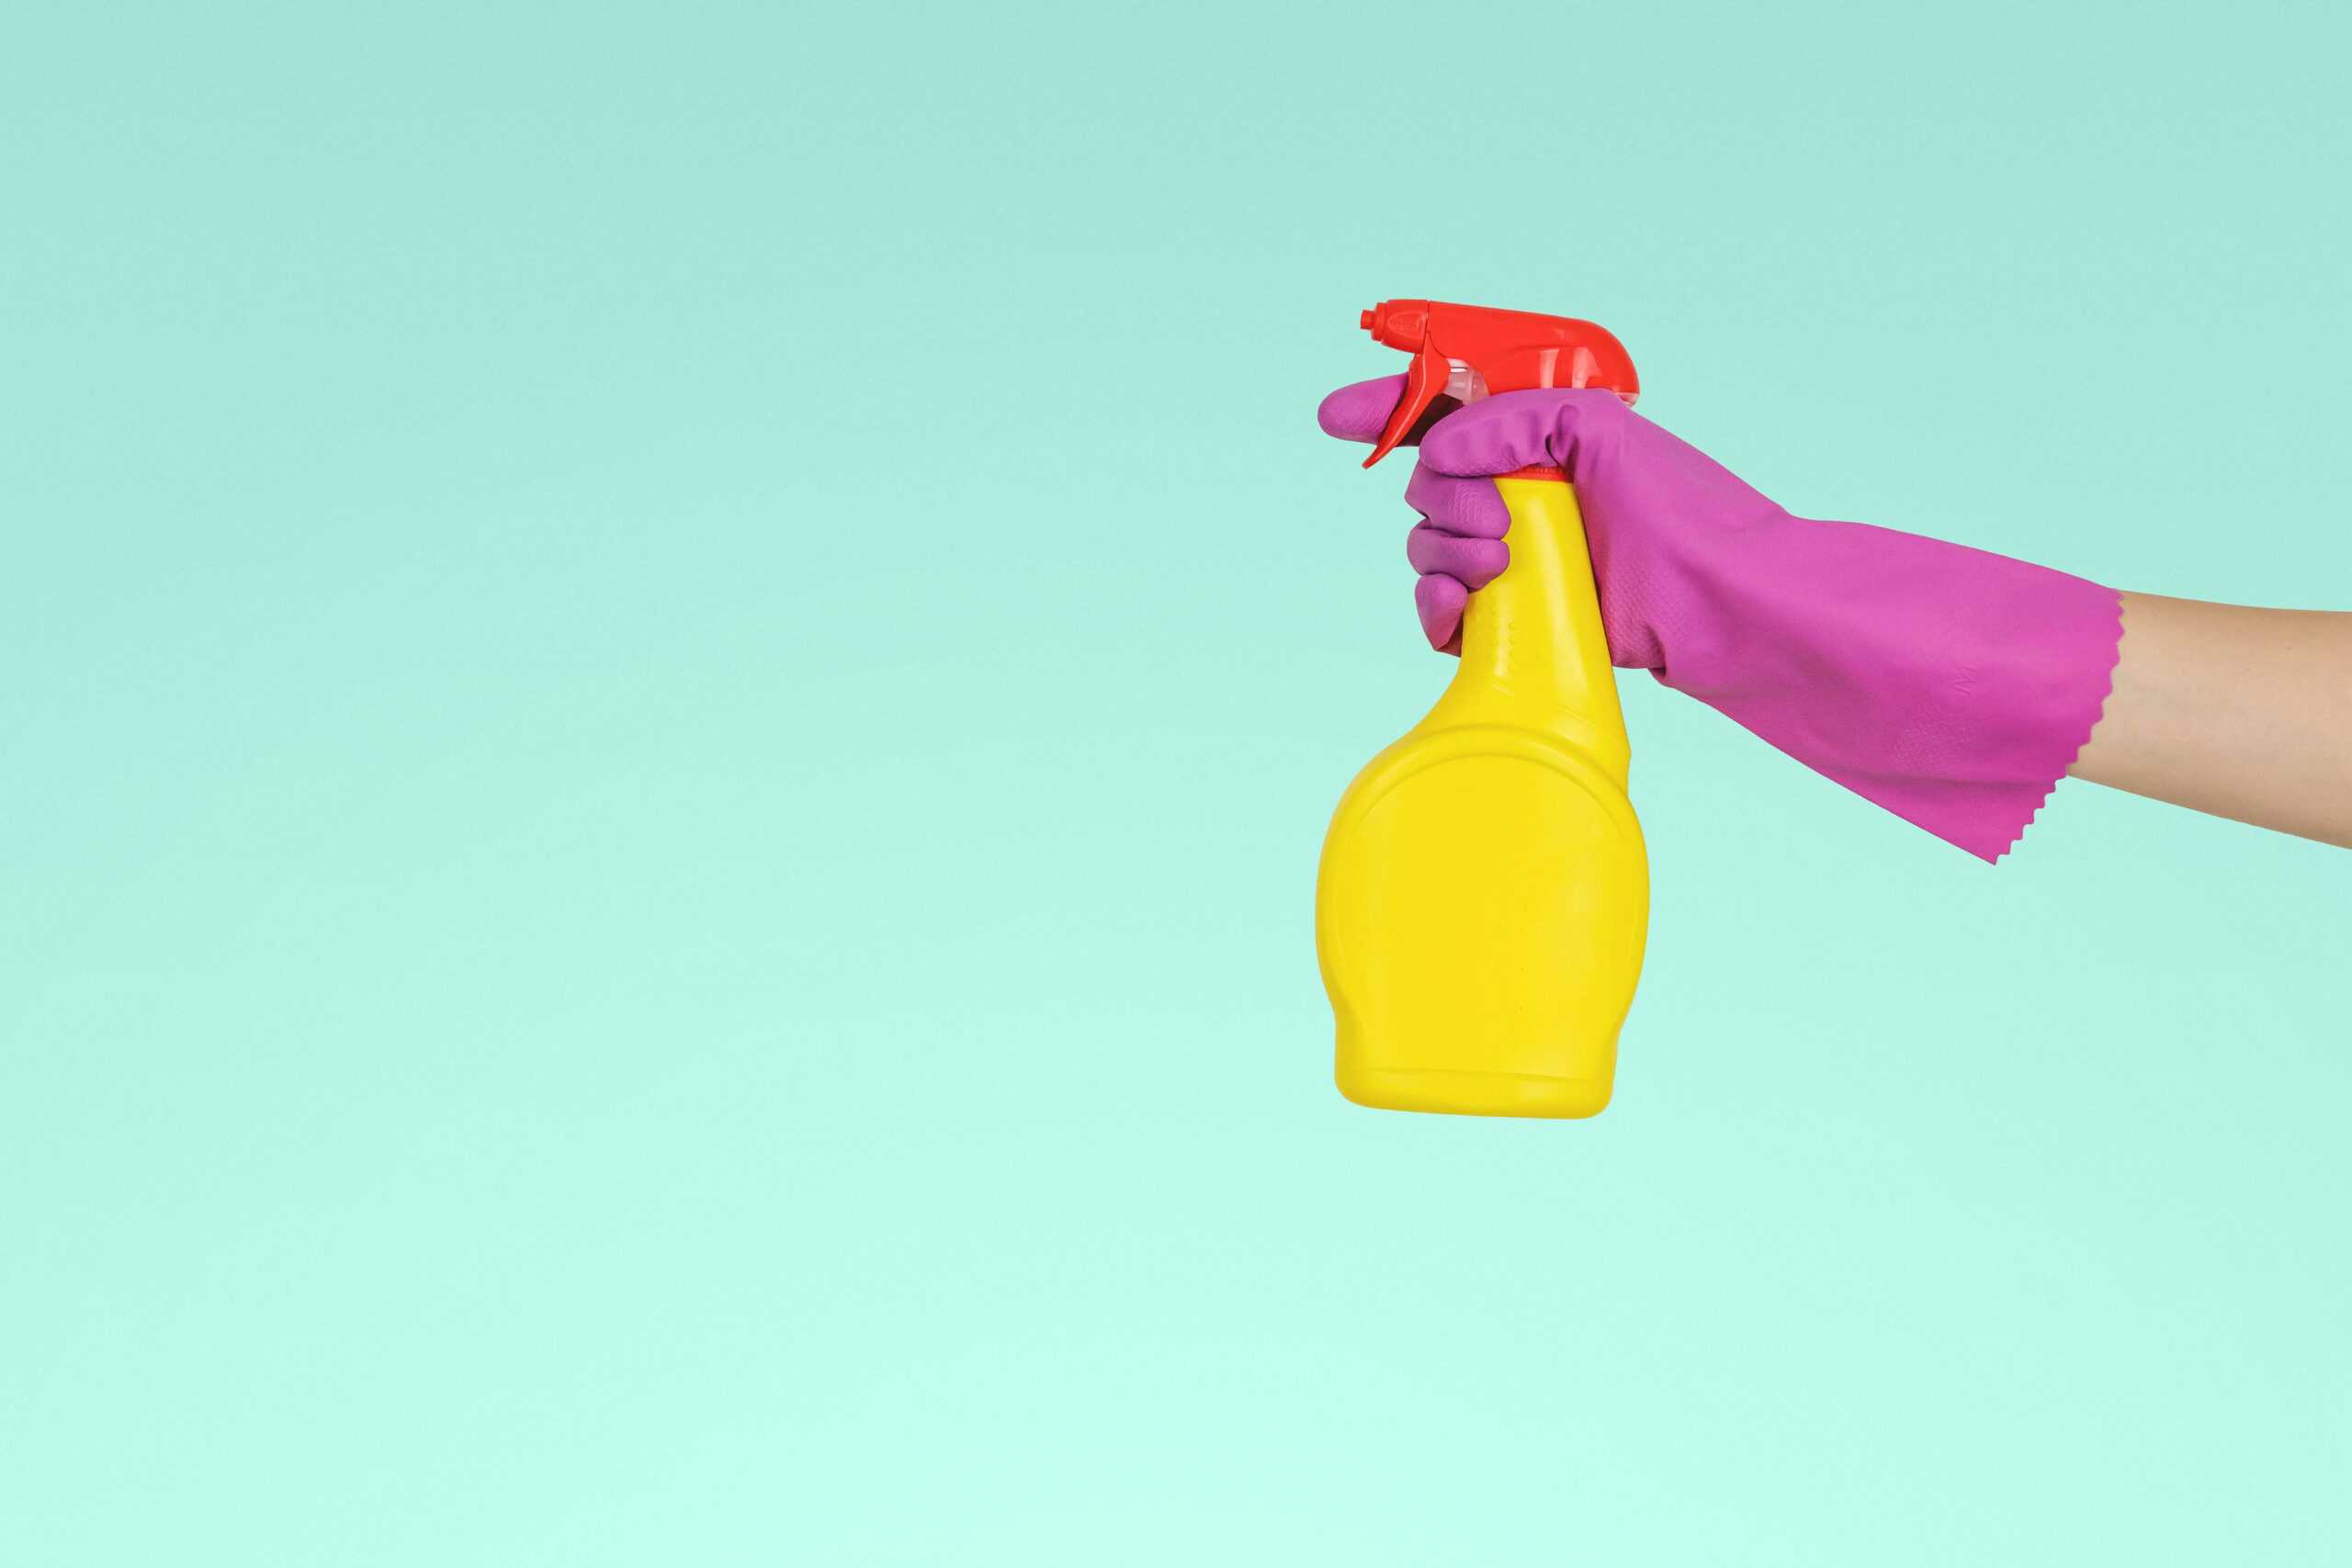 Spray bottle held by gloved hand